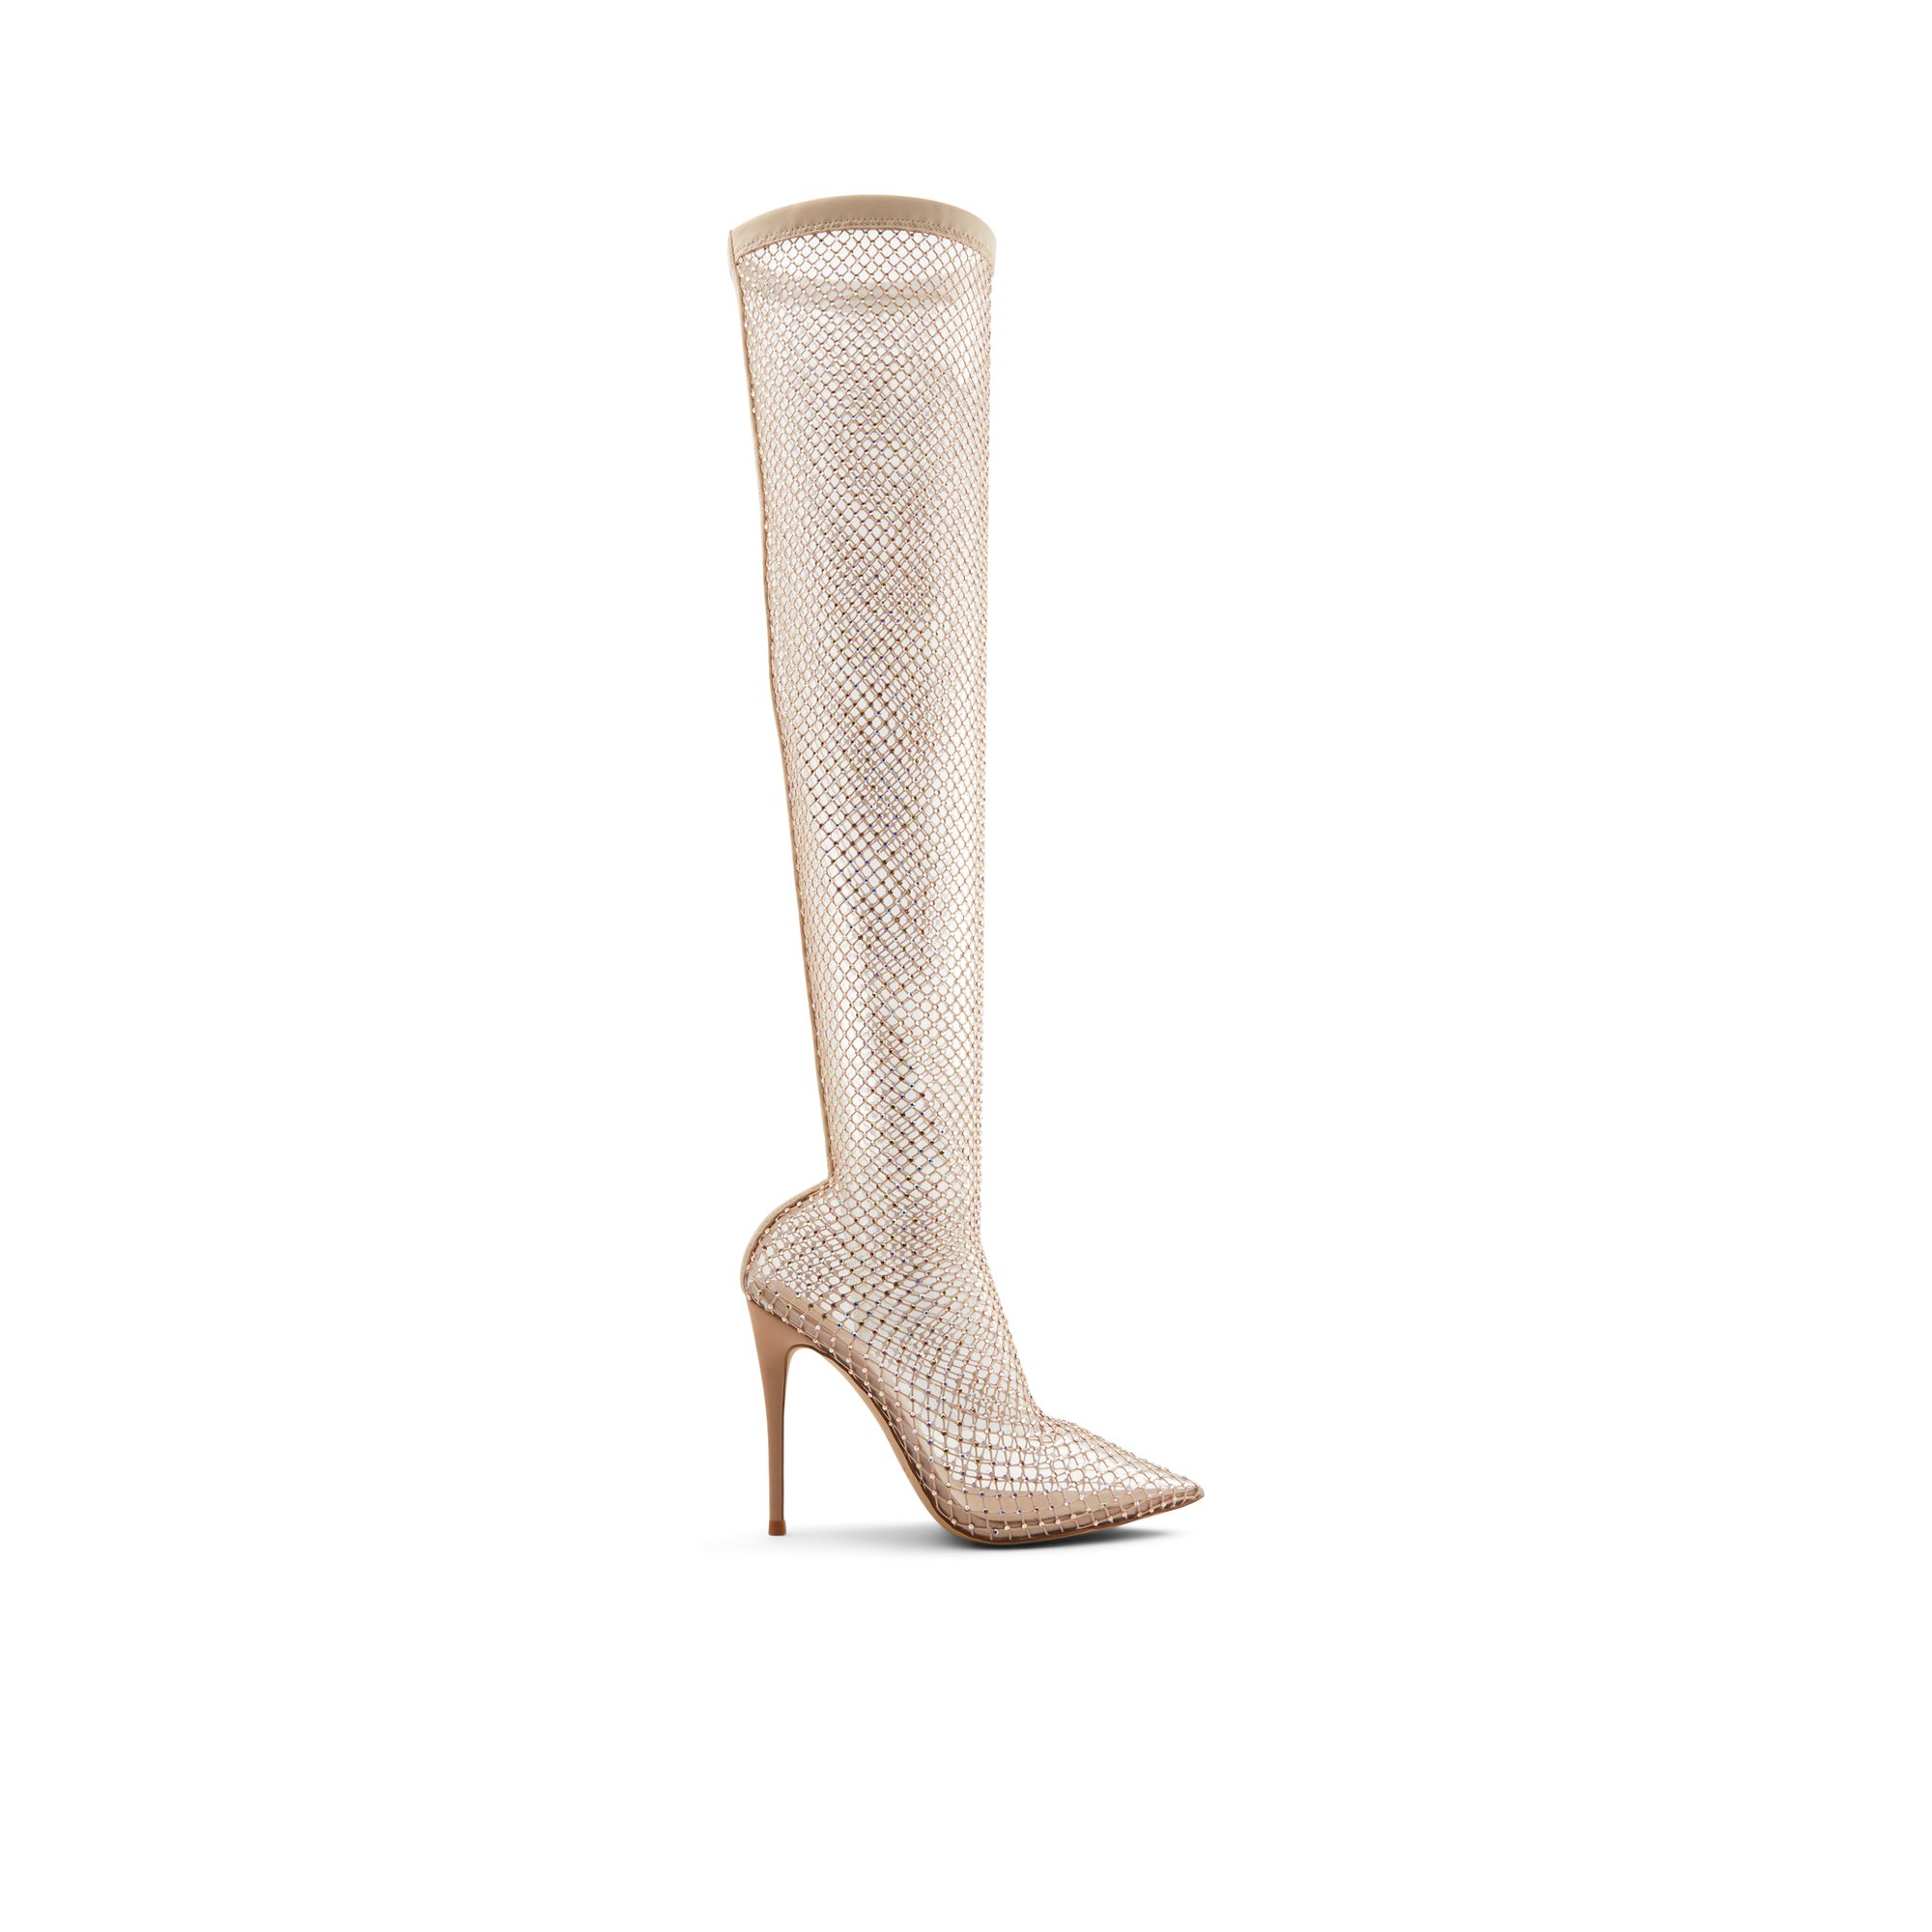 Image of ALDO Arturi - Women's Over-The-Knee Boot - Beige, Size 7.5